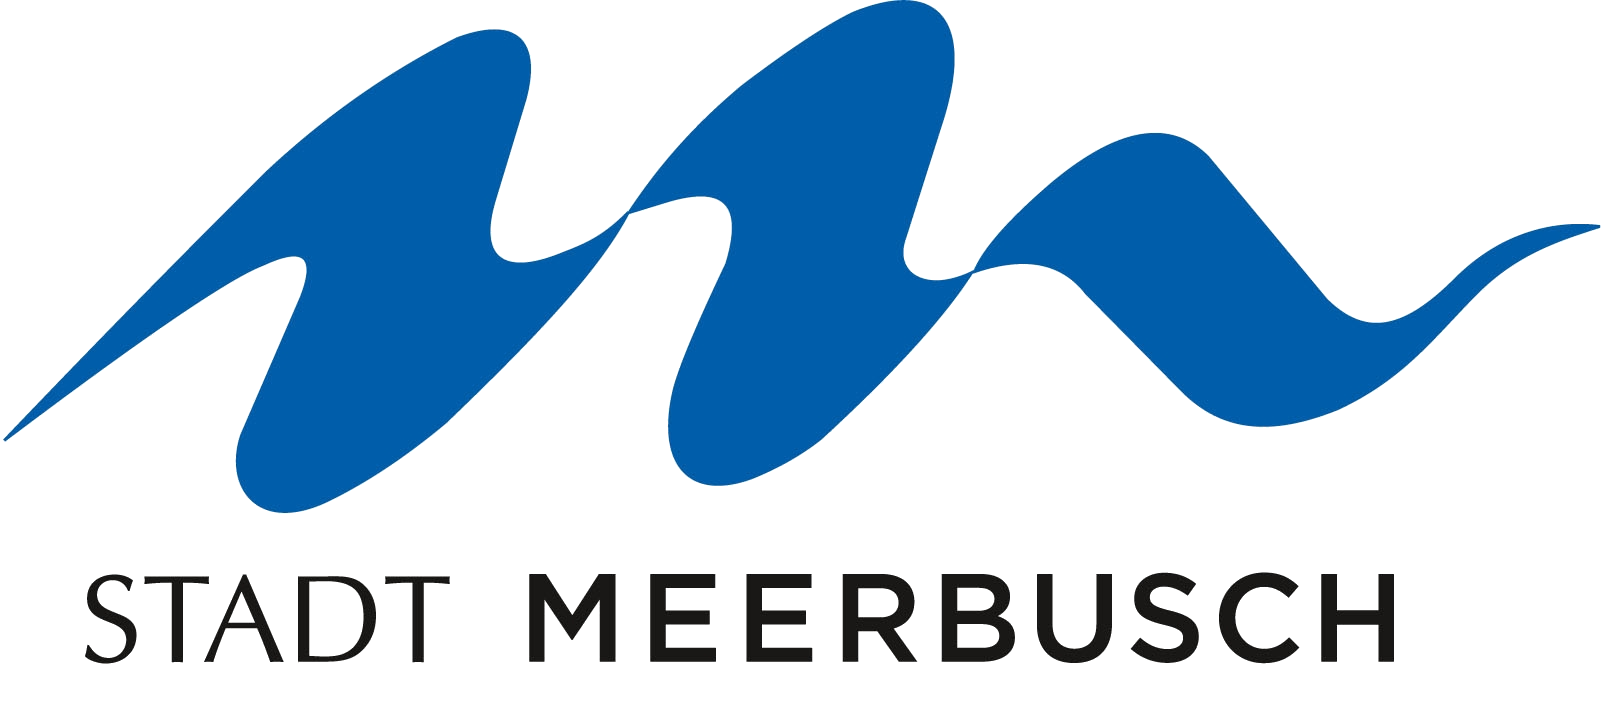 Stadt Meerbusch logo